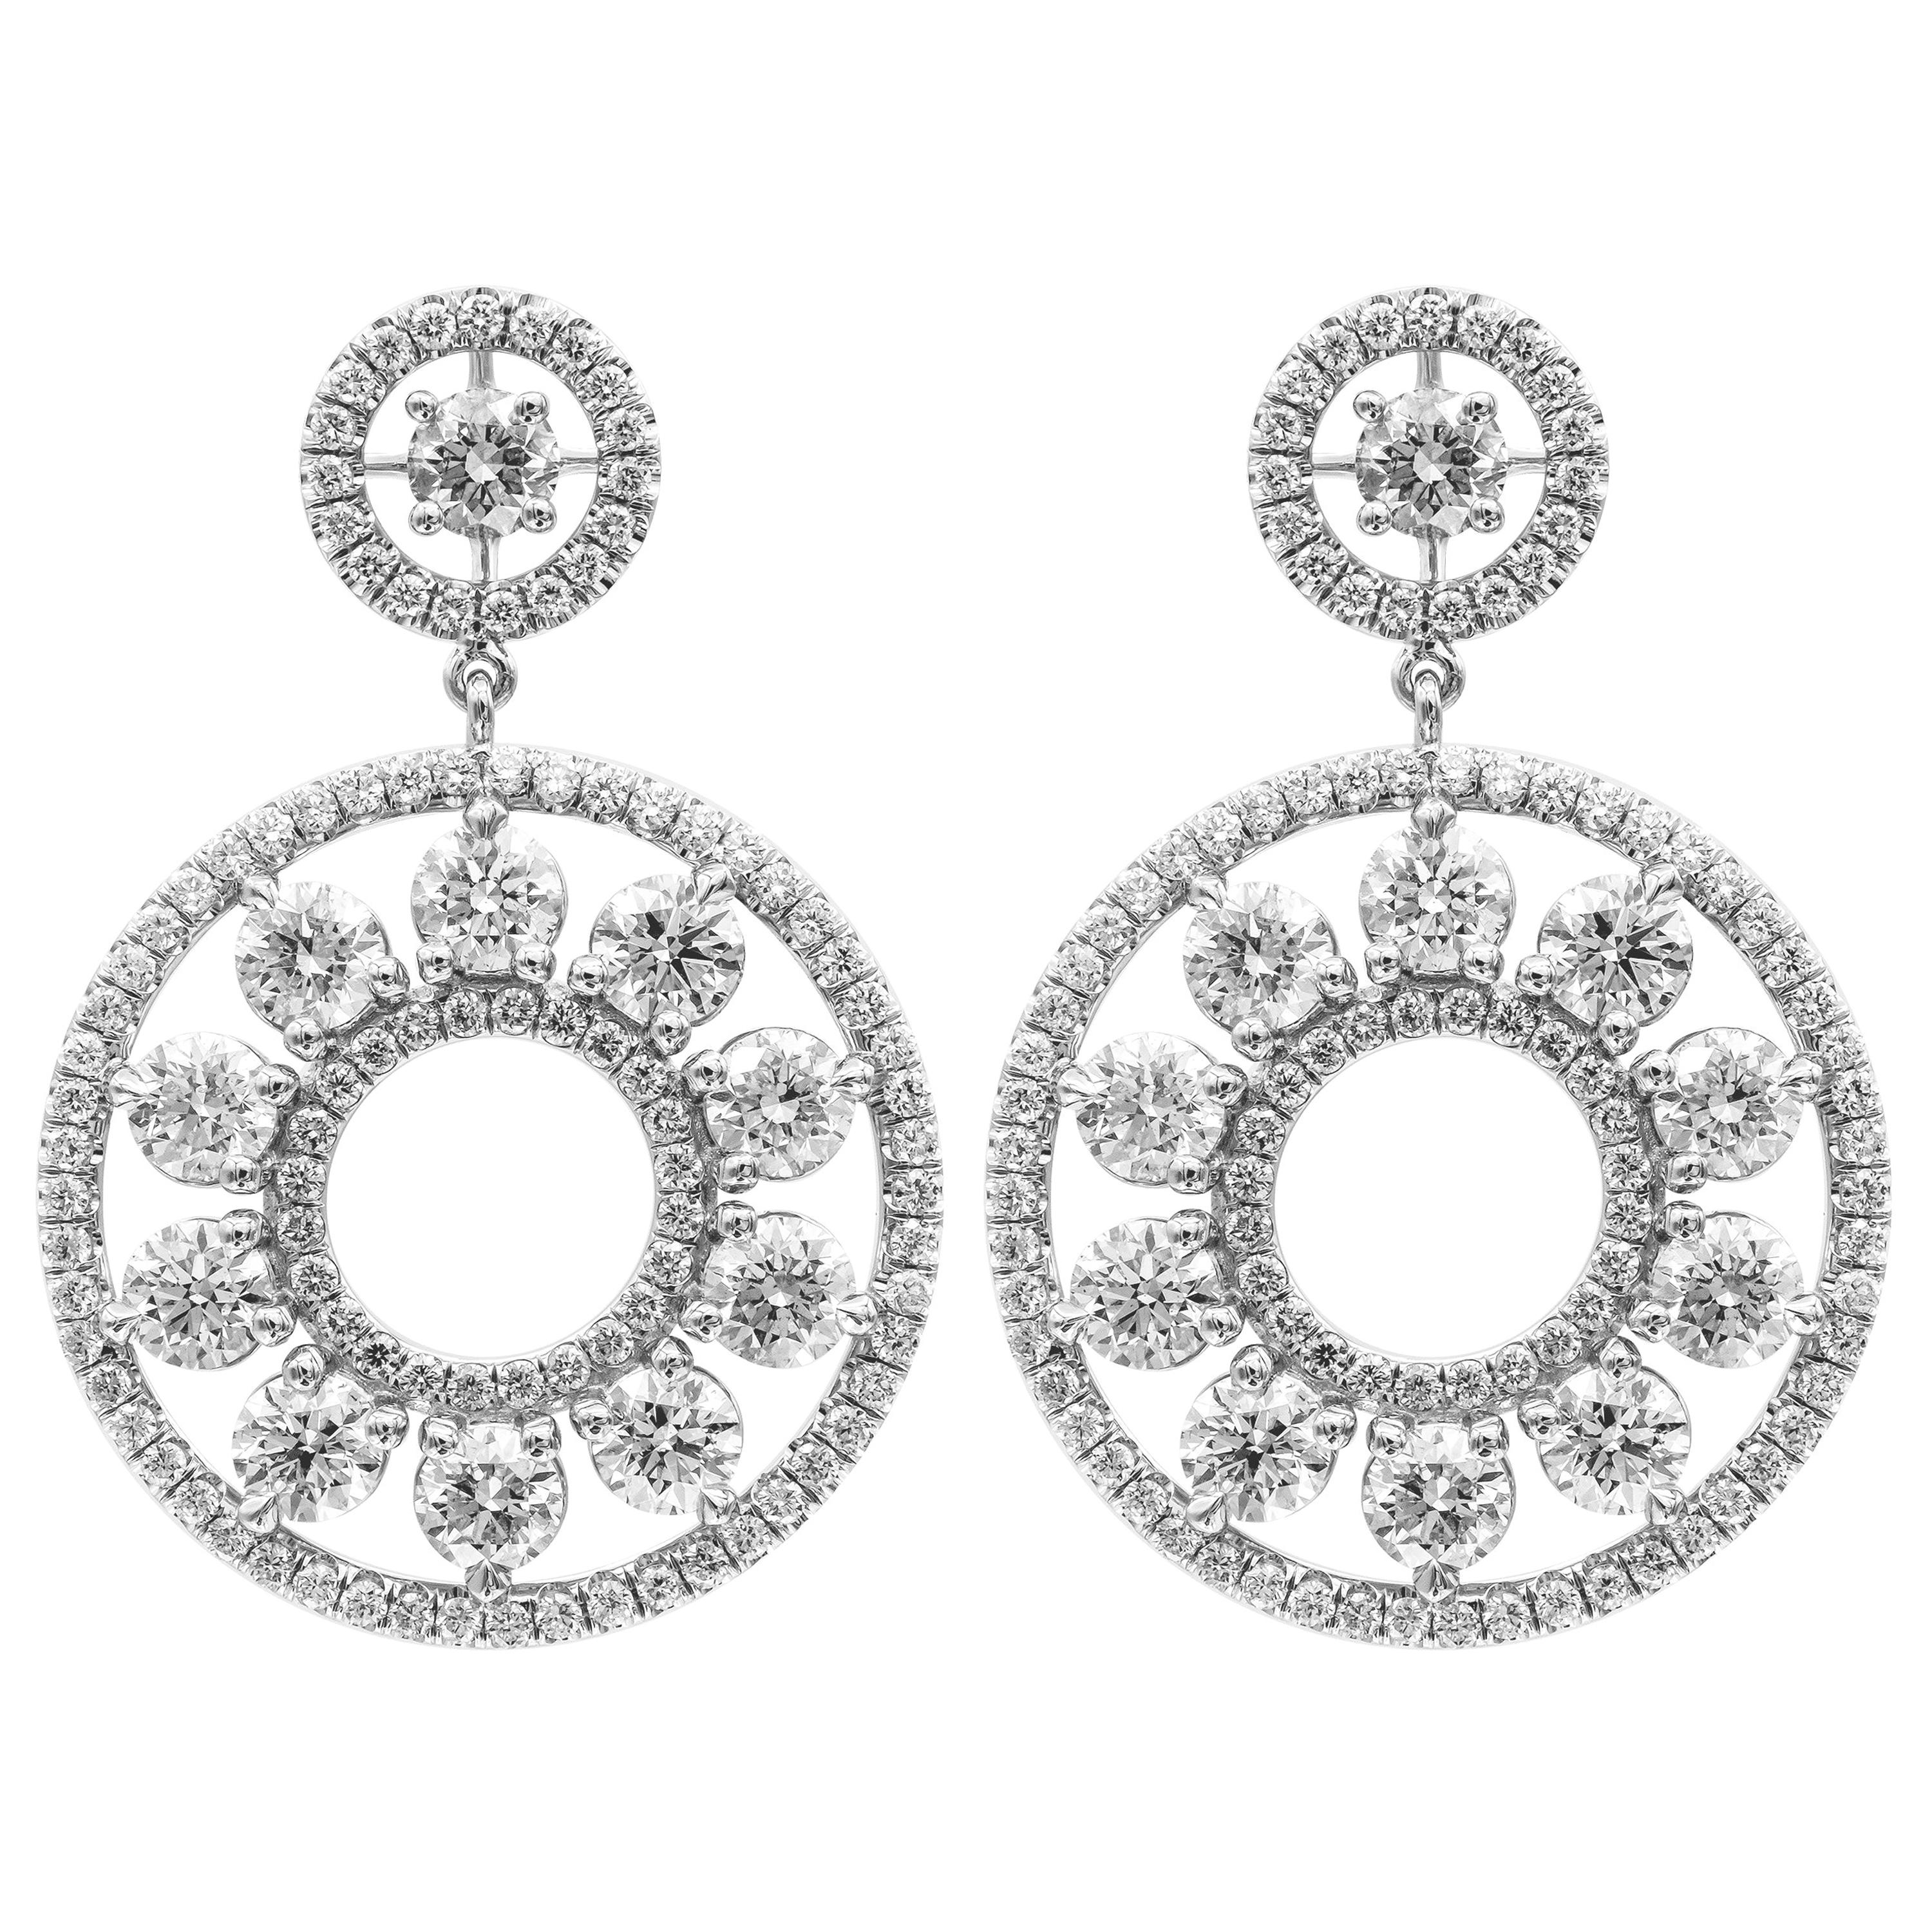 Earrings with Round Diamonds 6.58 Carat